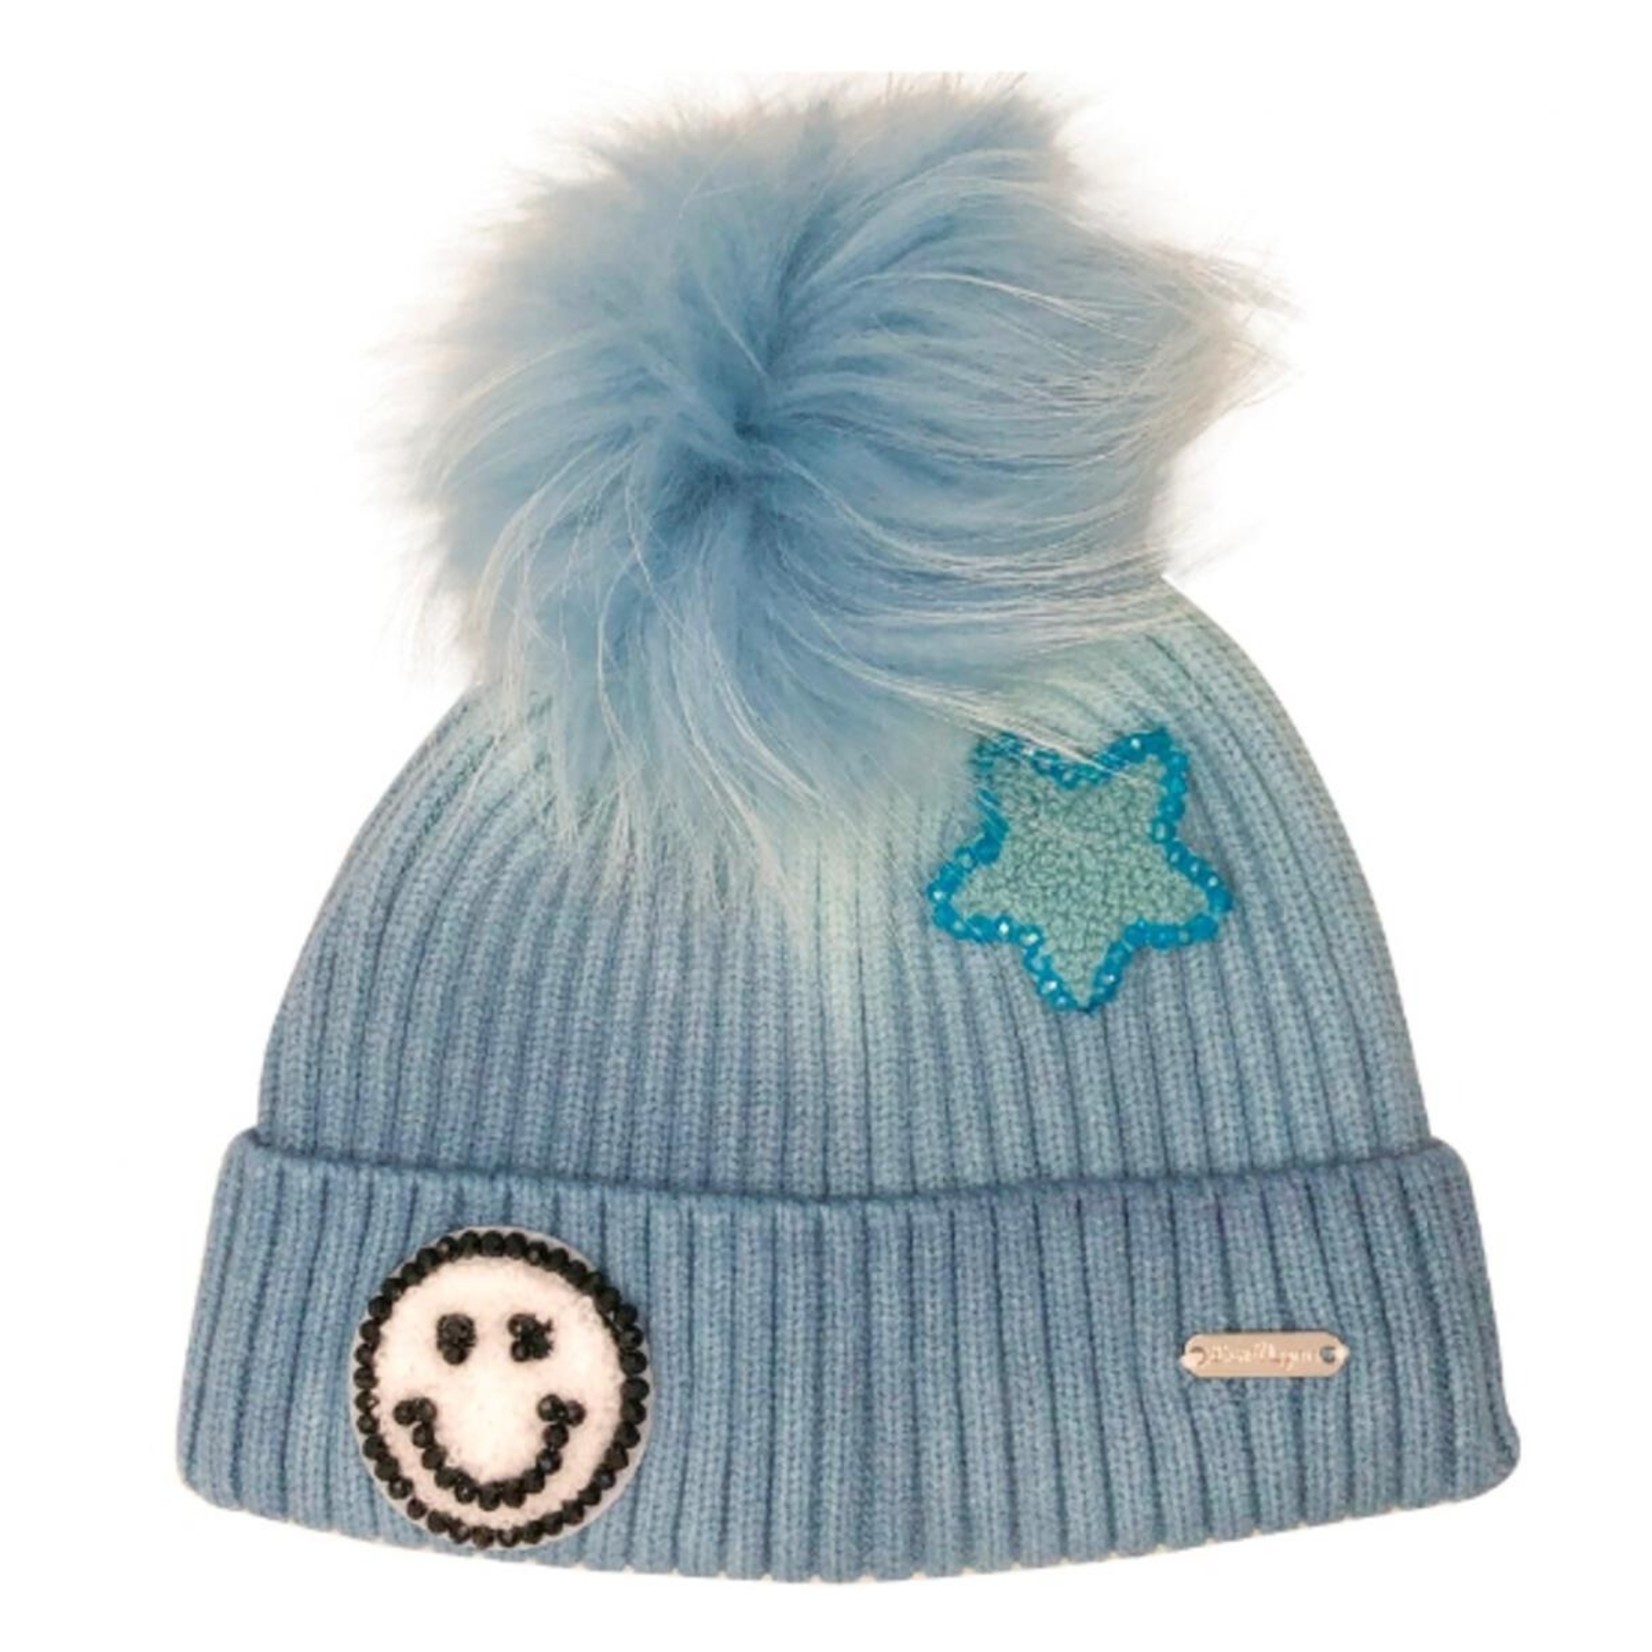 Poof Knit Hat - The Sandbox Children's Boutique